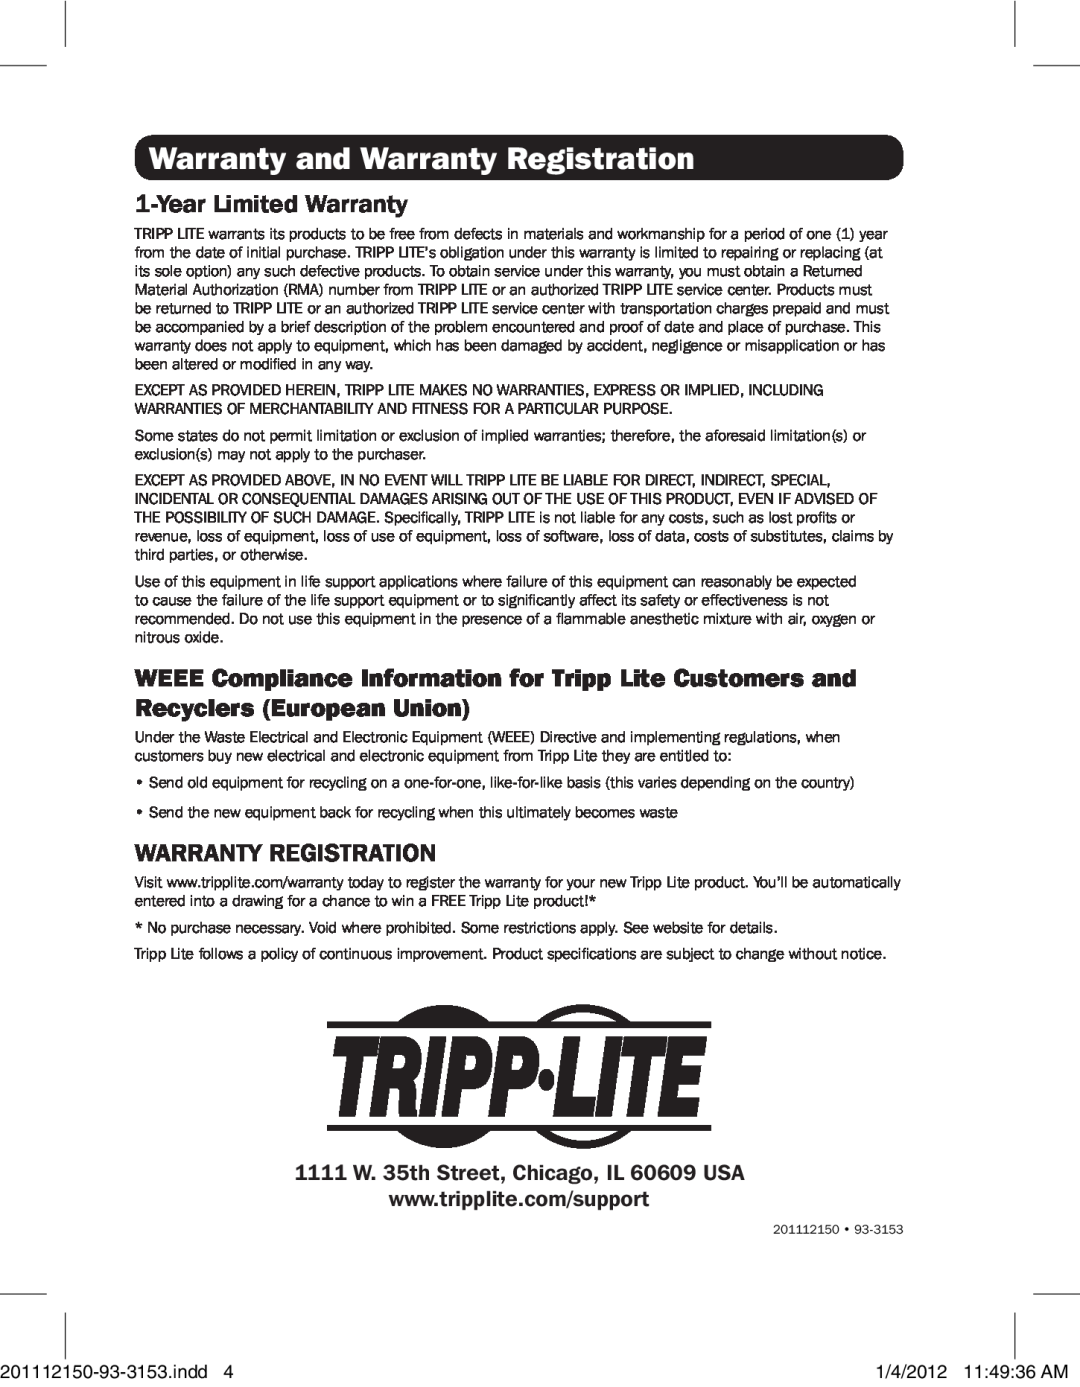 Tripp Lite B125-150 owner manual Warranty and Warranty Registration, 1111 W. 35th Street, Chicago, IL 60609 USA, indd4 